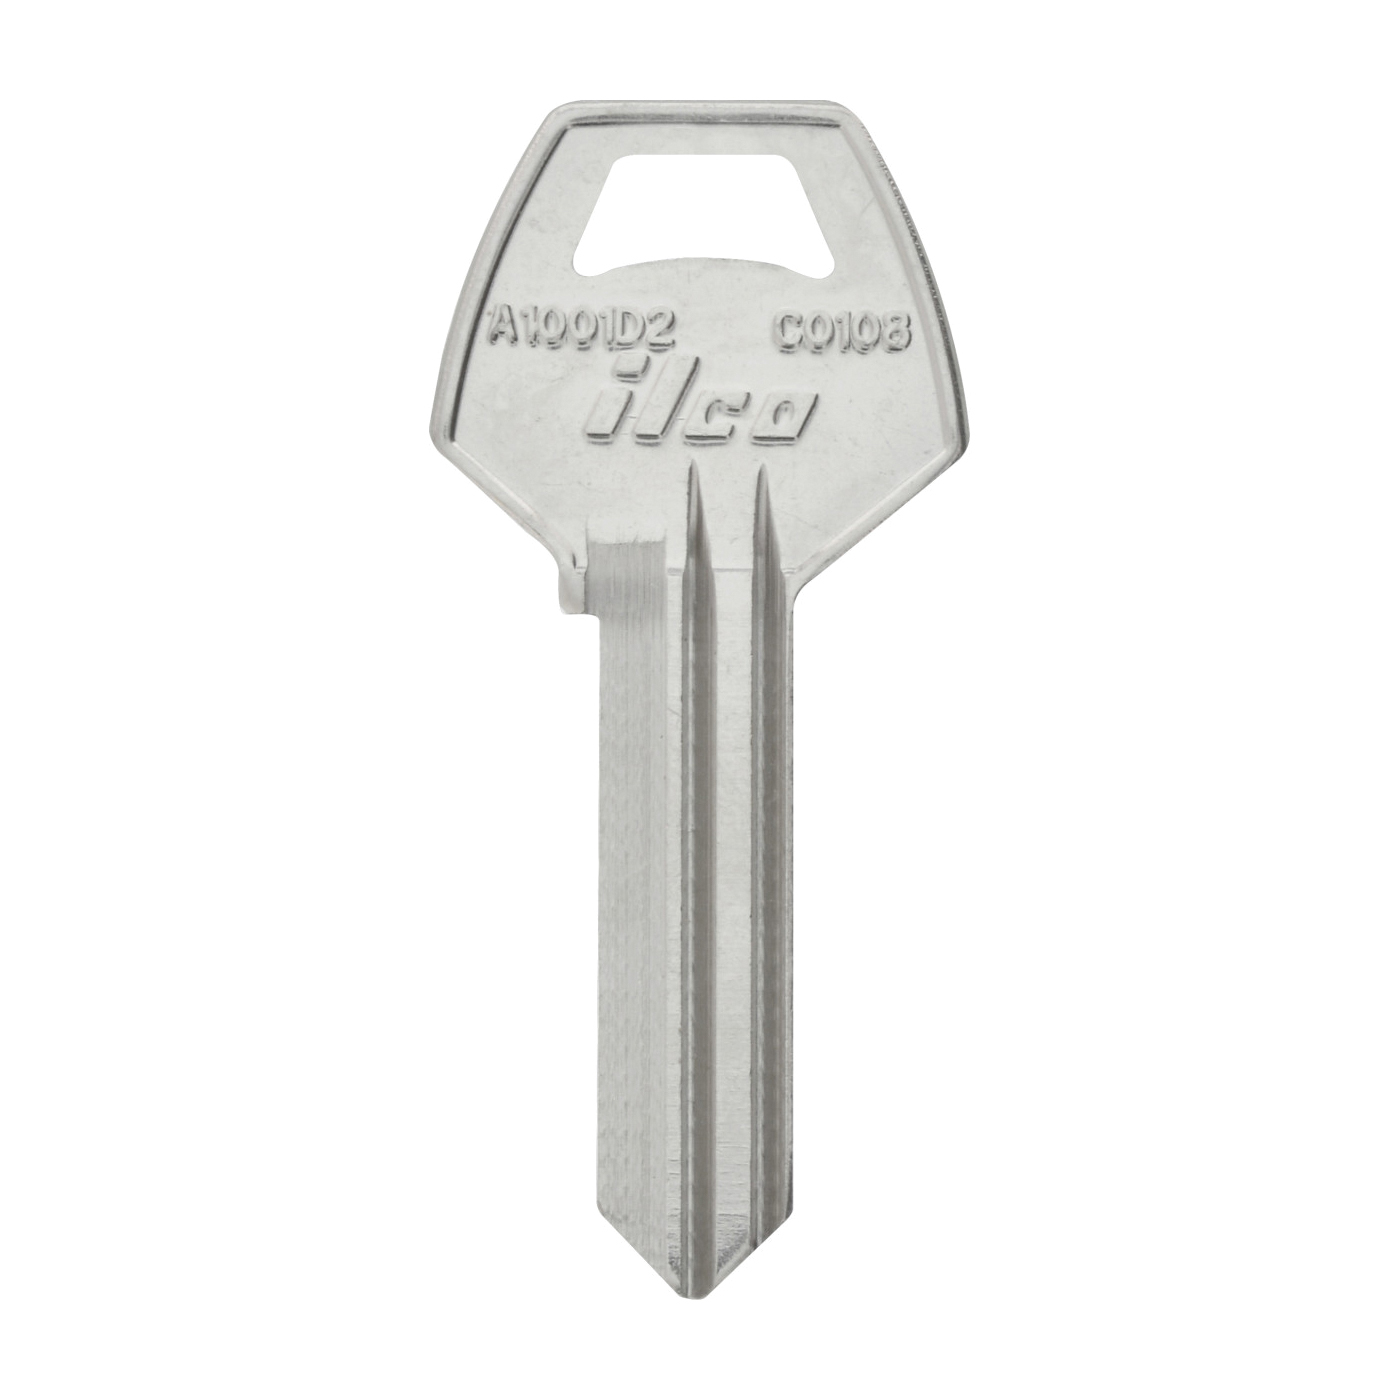 442180 Key Blank, Brass, Nickel-Plated, For: Corbin Locks